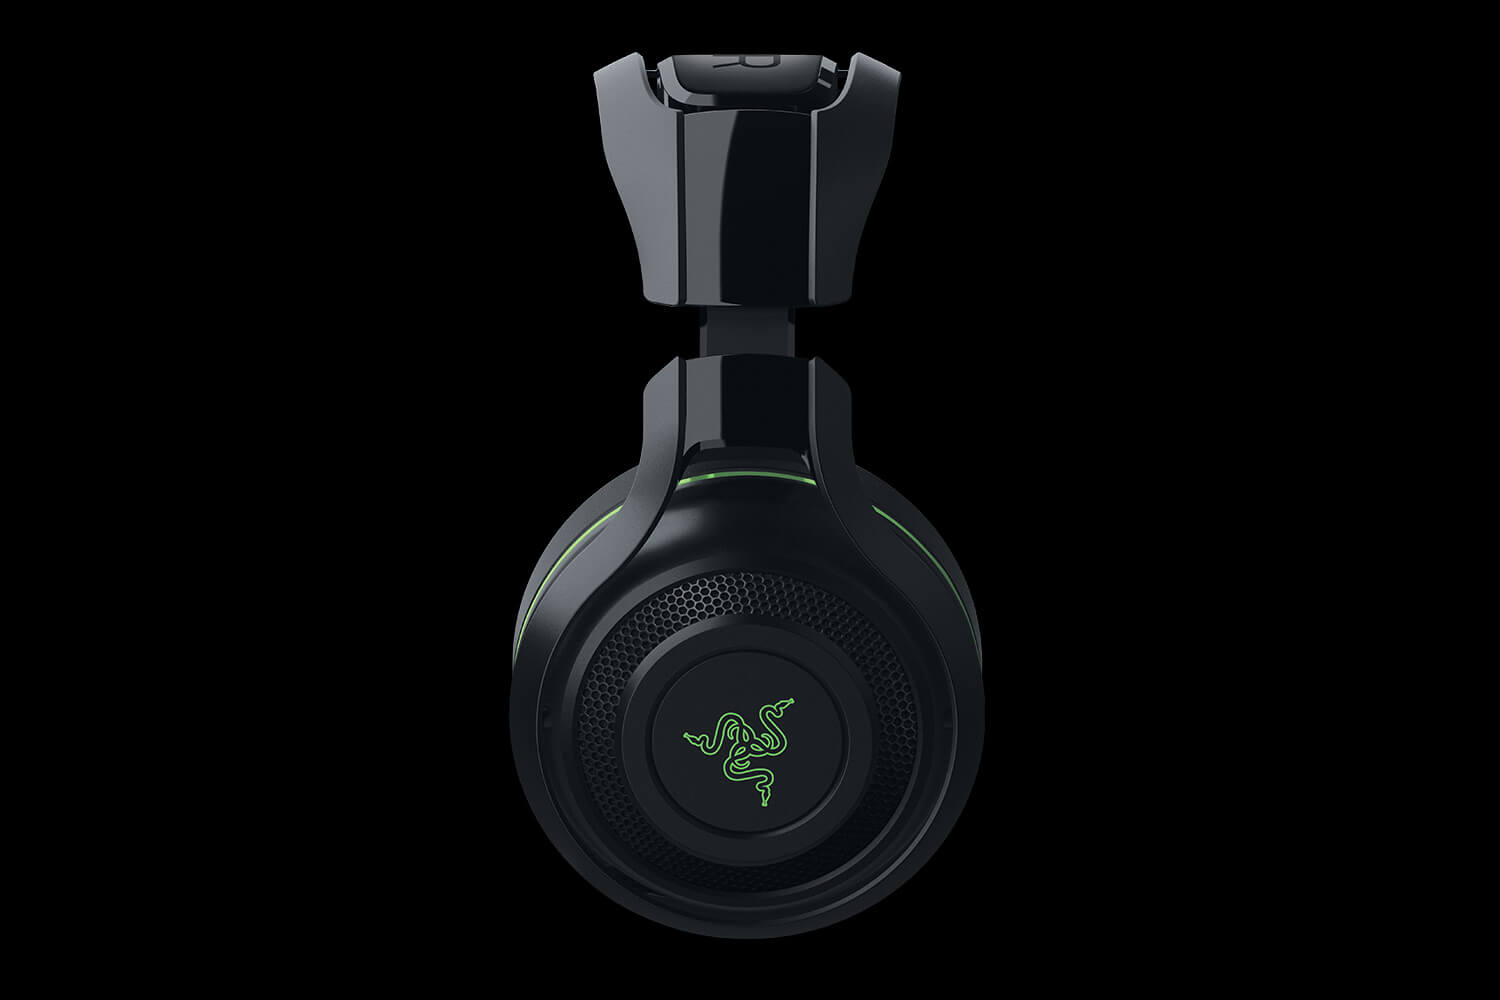 Razer ManO'War 7.1 Analog Virtuell Surround Sound Gaming Headset Green Edition